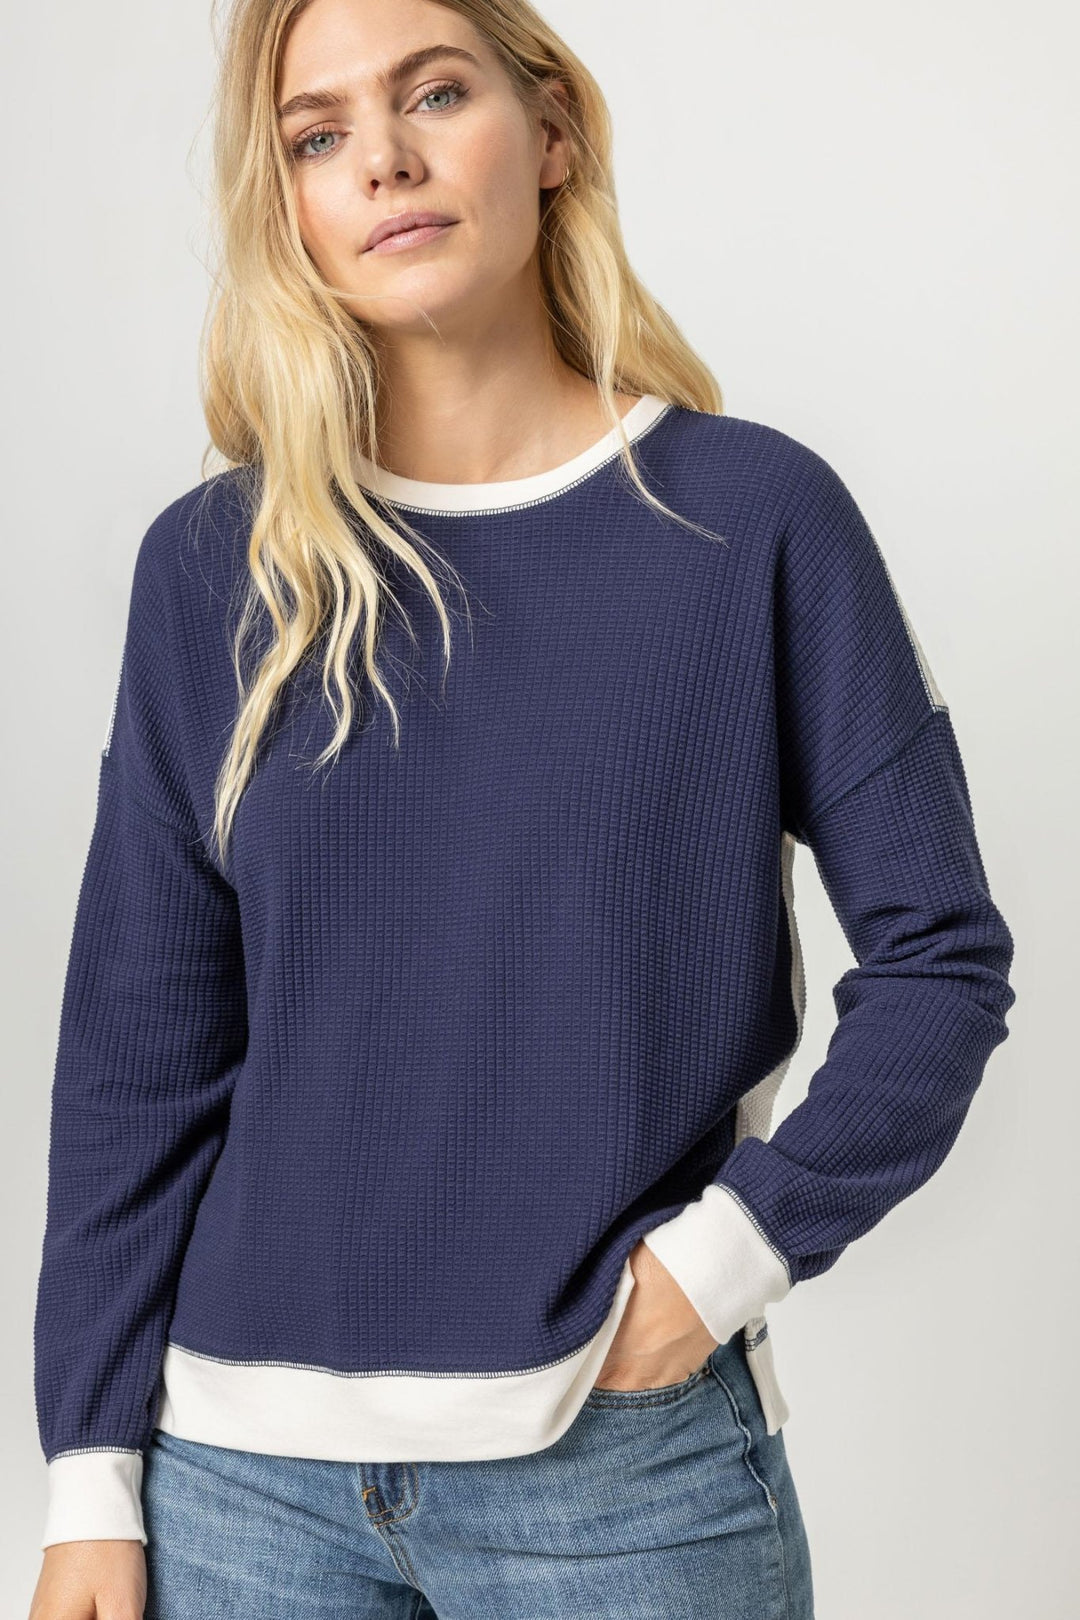 Lilla P - Two Tone Waffle Texture Sweatshirt: Navy/Ecru - Shorely Chic Boutique